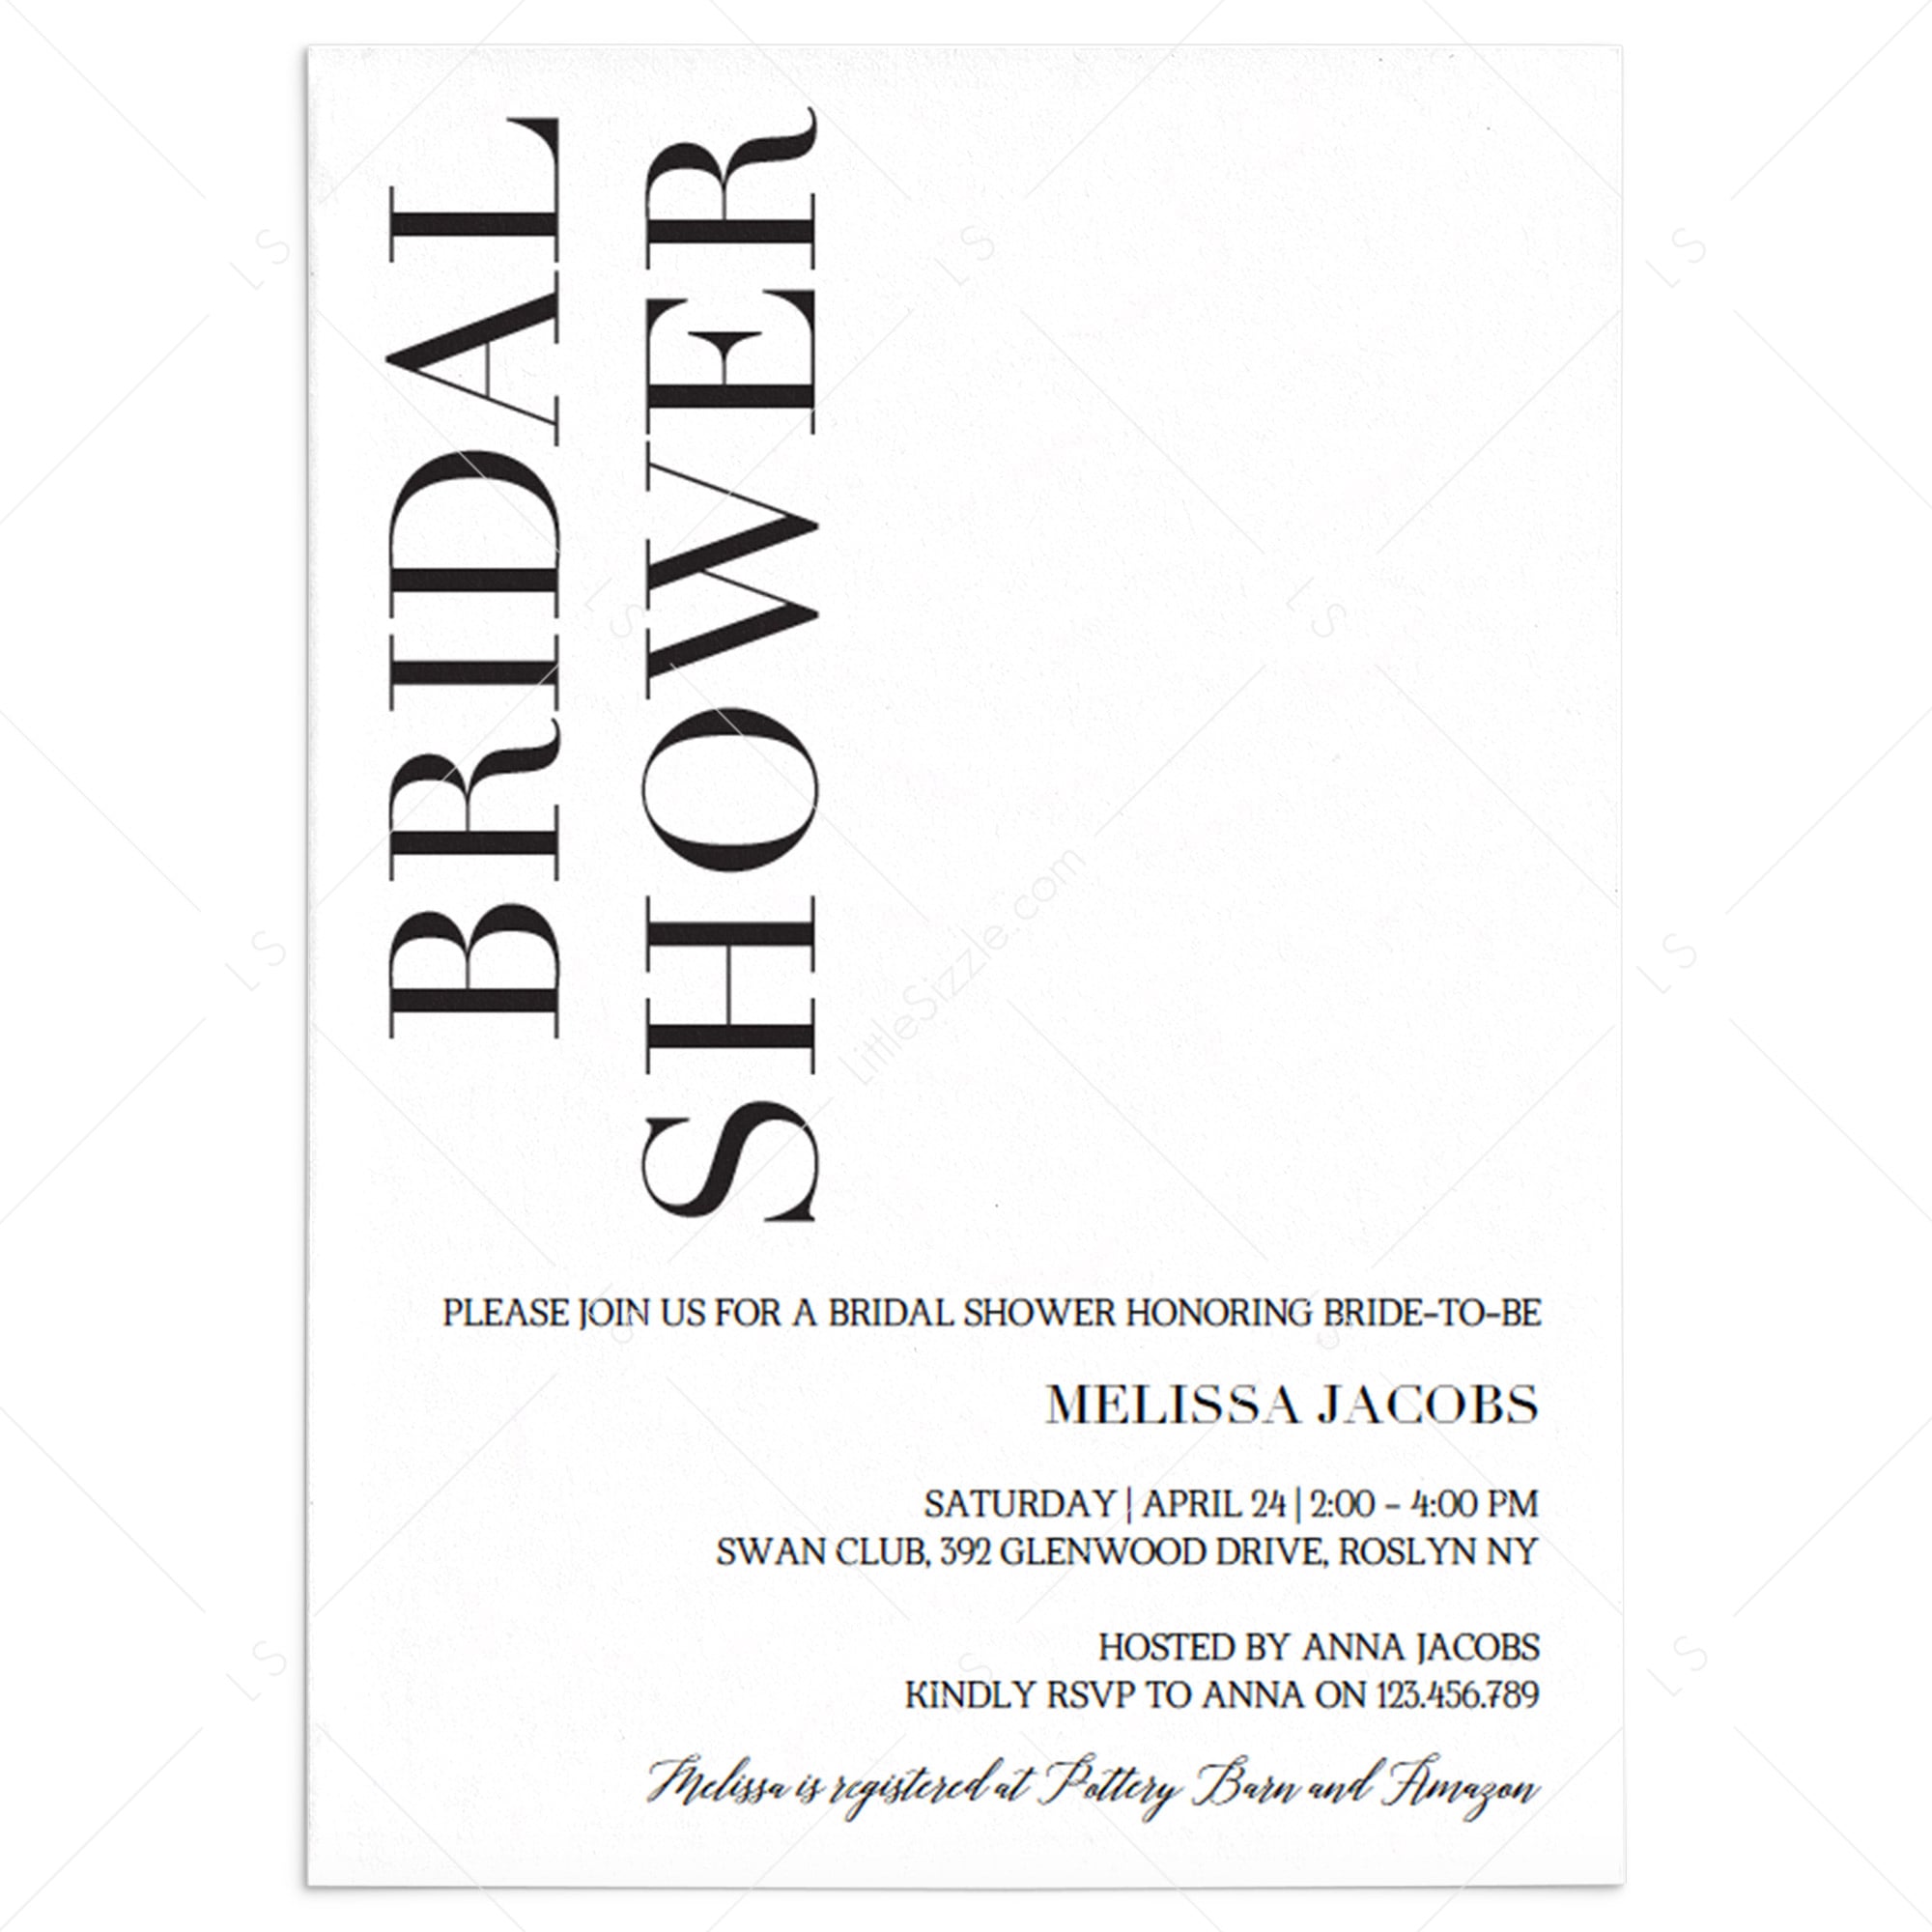 Minimal bridal shower invitation template by LittleSizzle